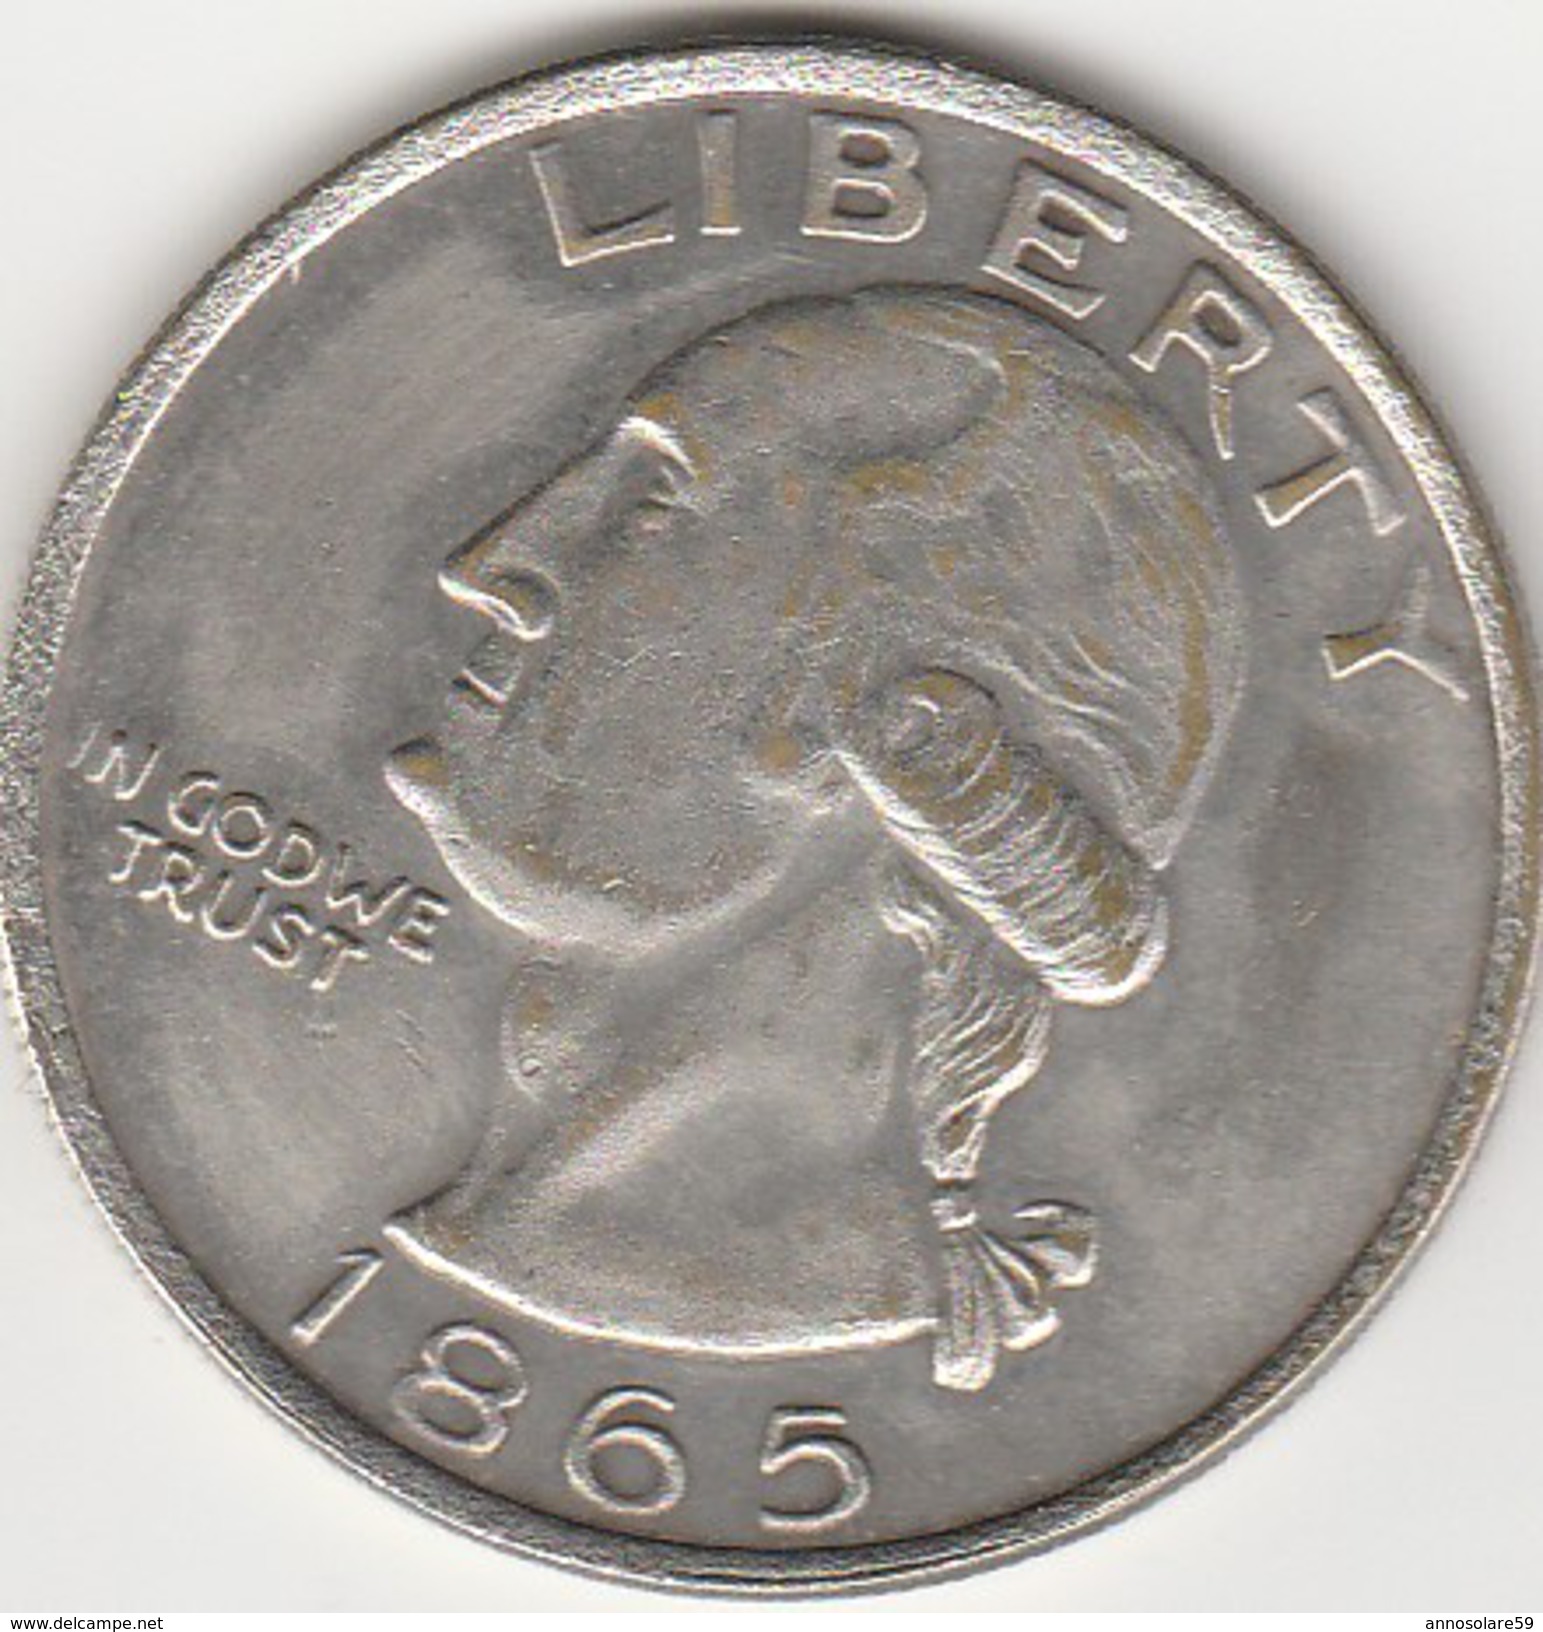 MONETA - ONE DOLLAR - UNITED STATES OF AMERICA - 1865 - LEGGI - Centraal-Amerika